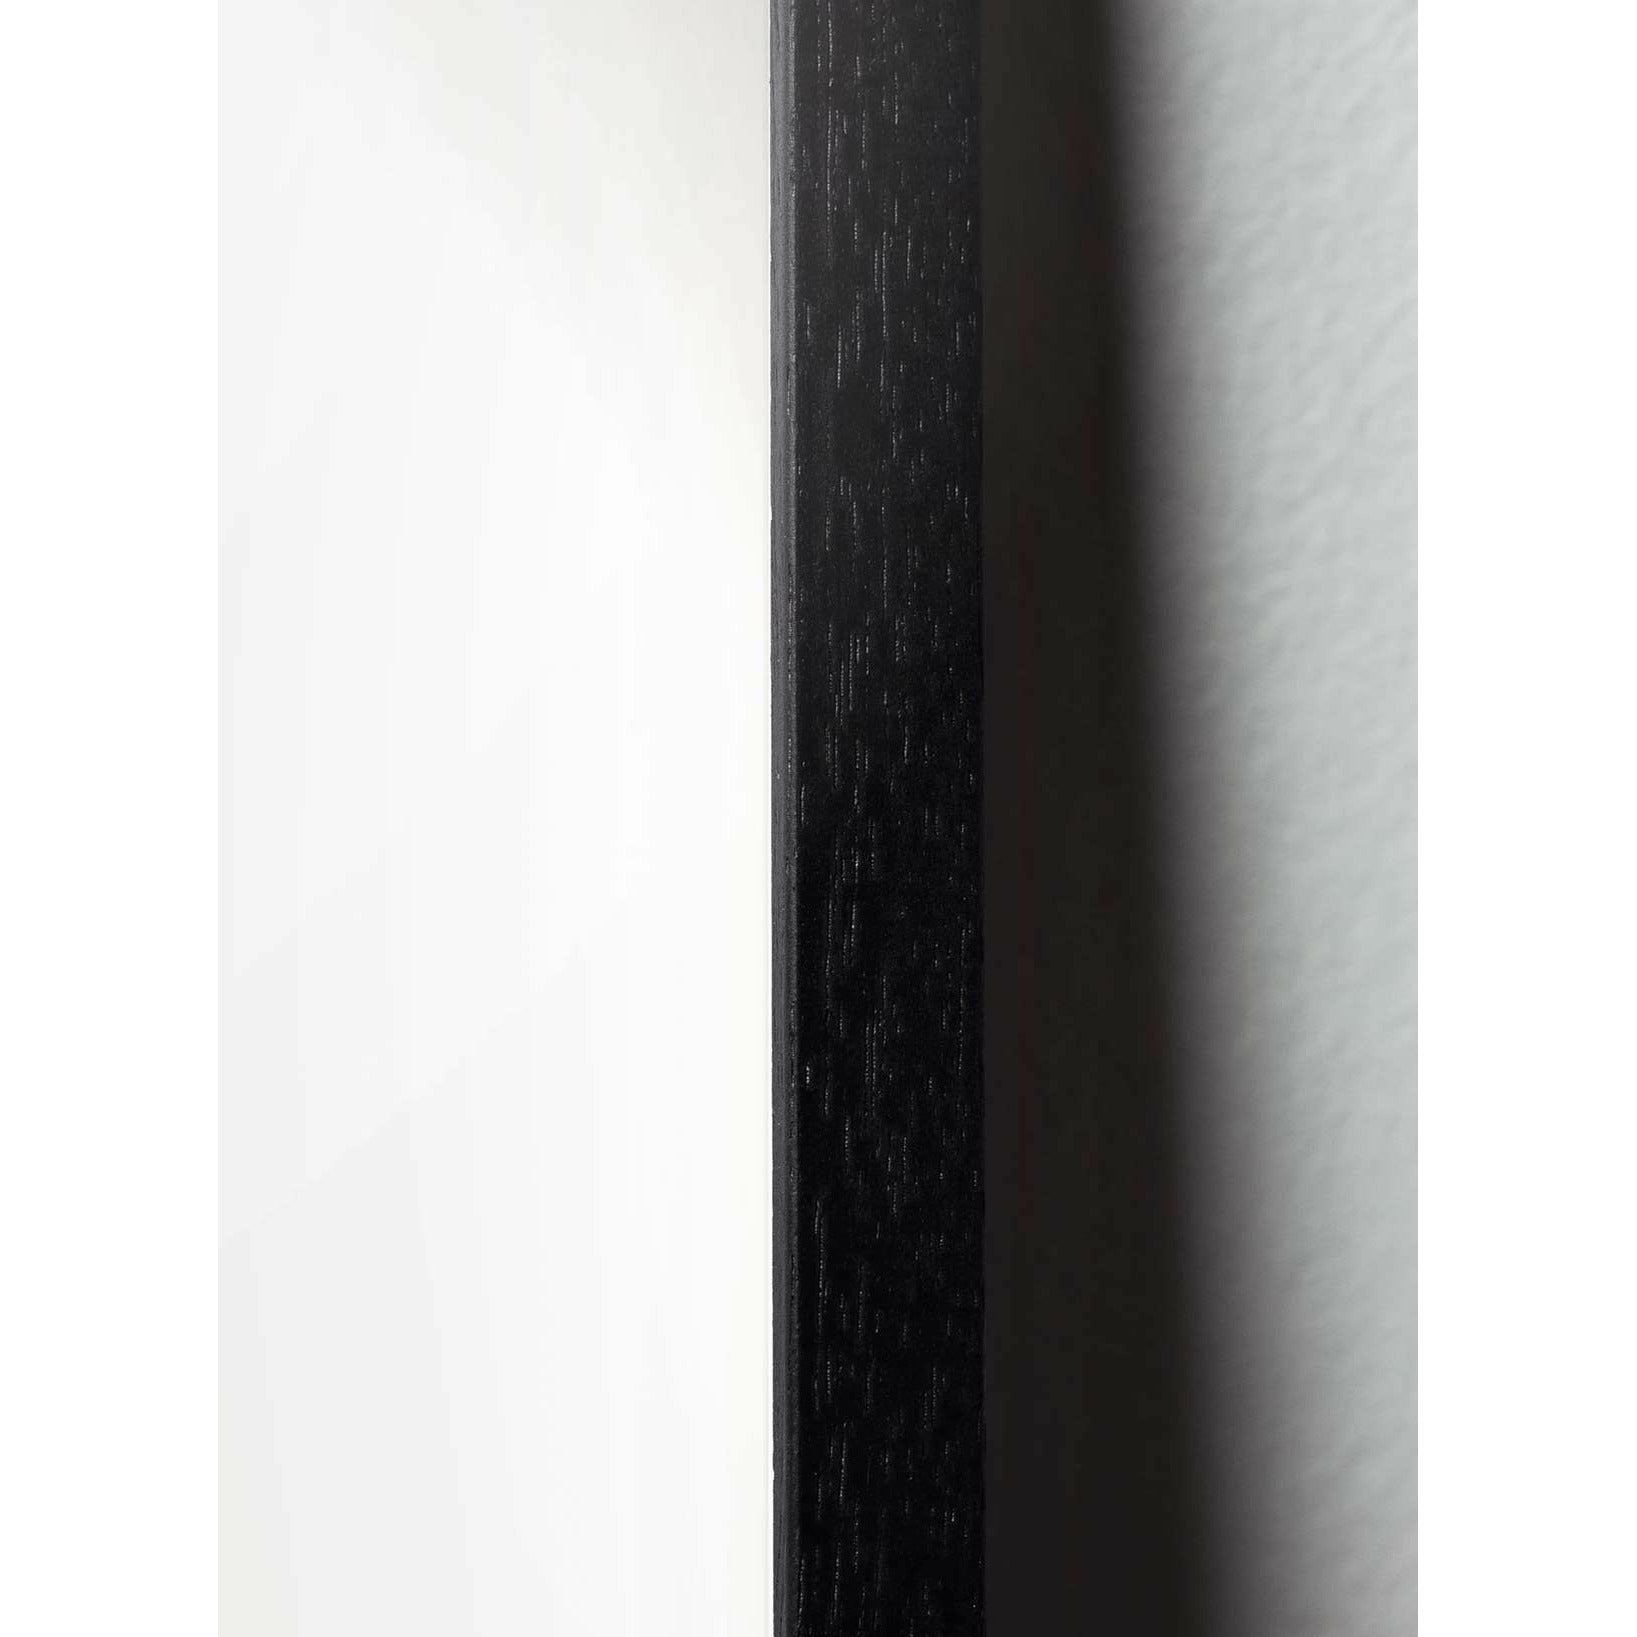 Brainchild Teddybeer klassieke poster, frame in zwart gelakt hout 30x40 cm, zandkleurige achtergrond